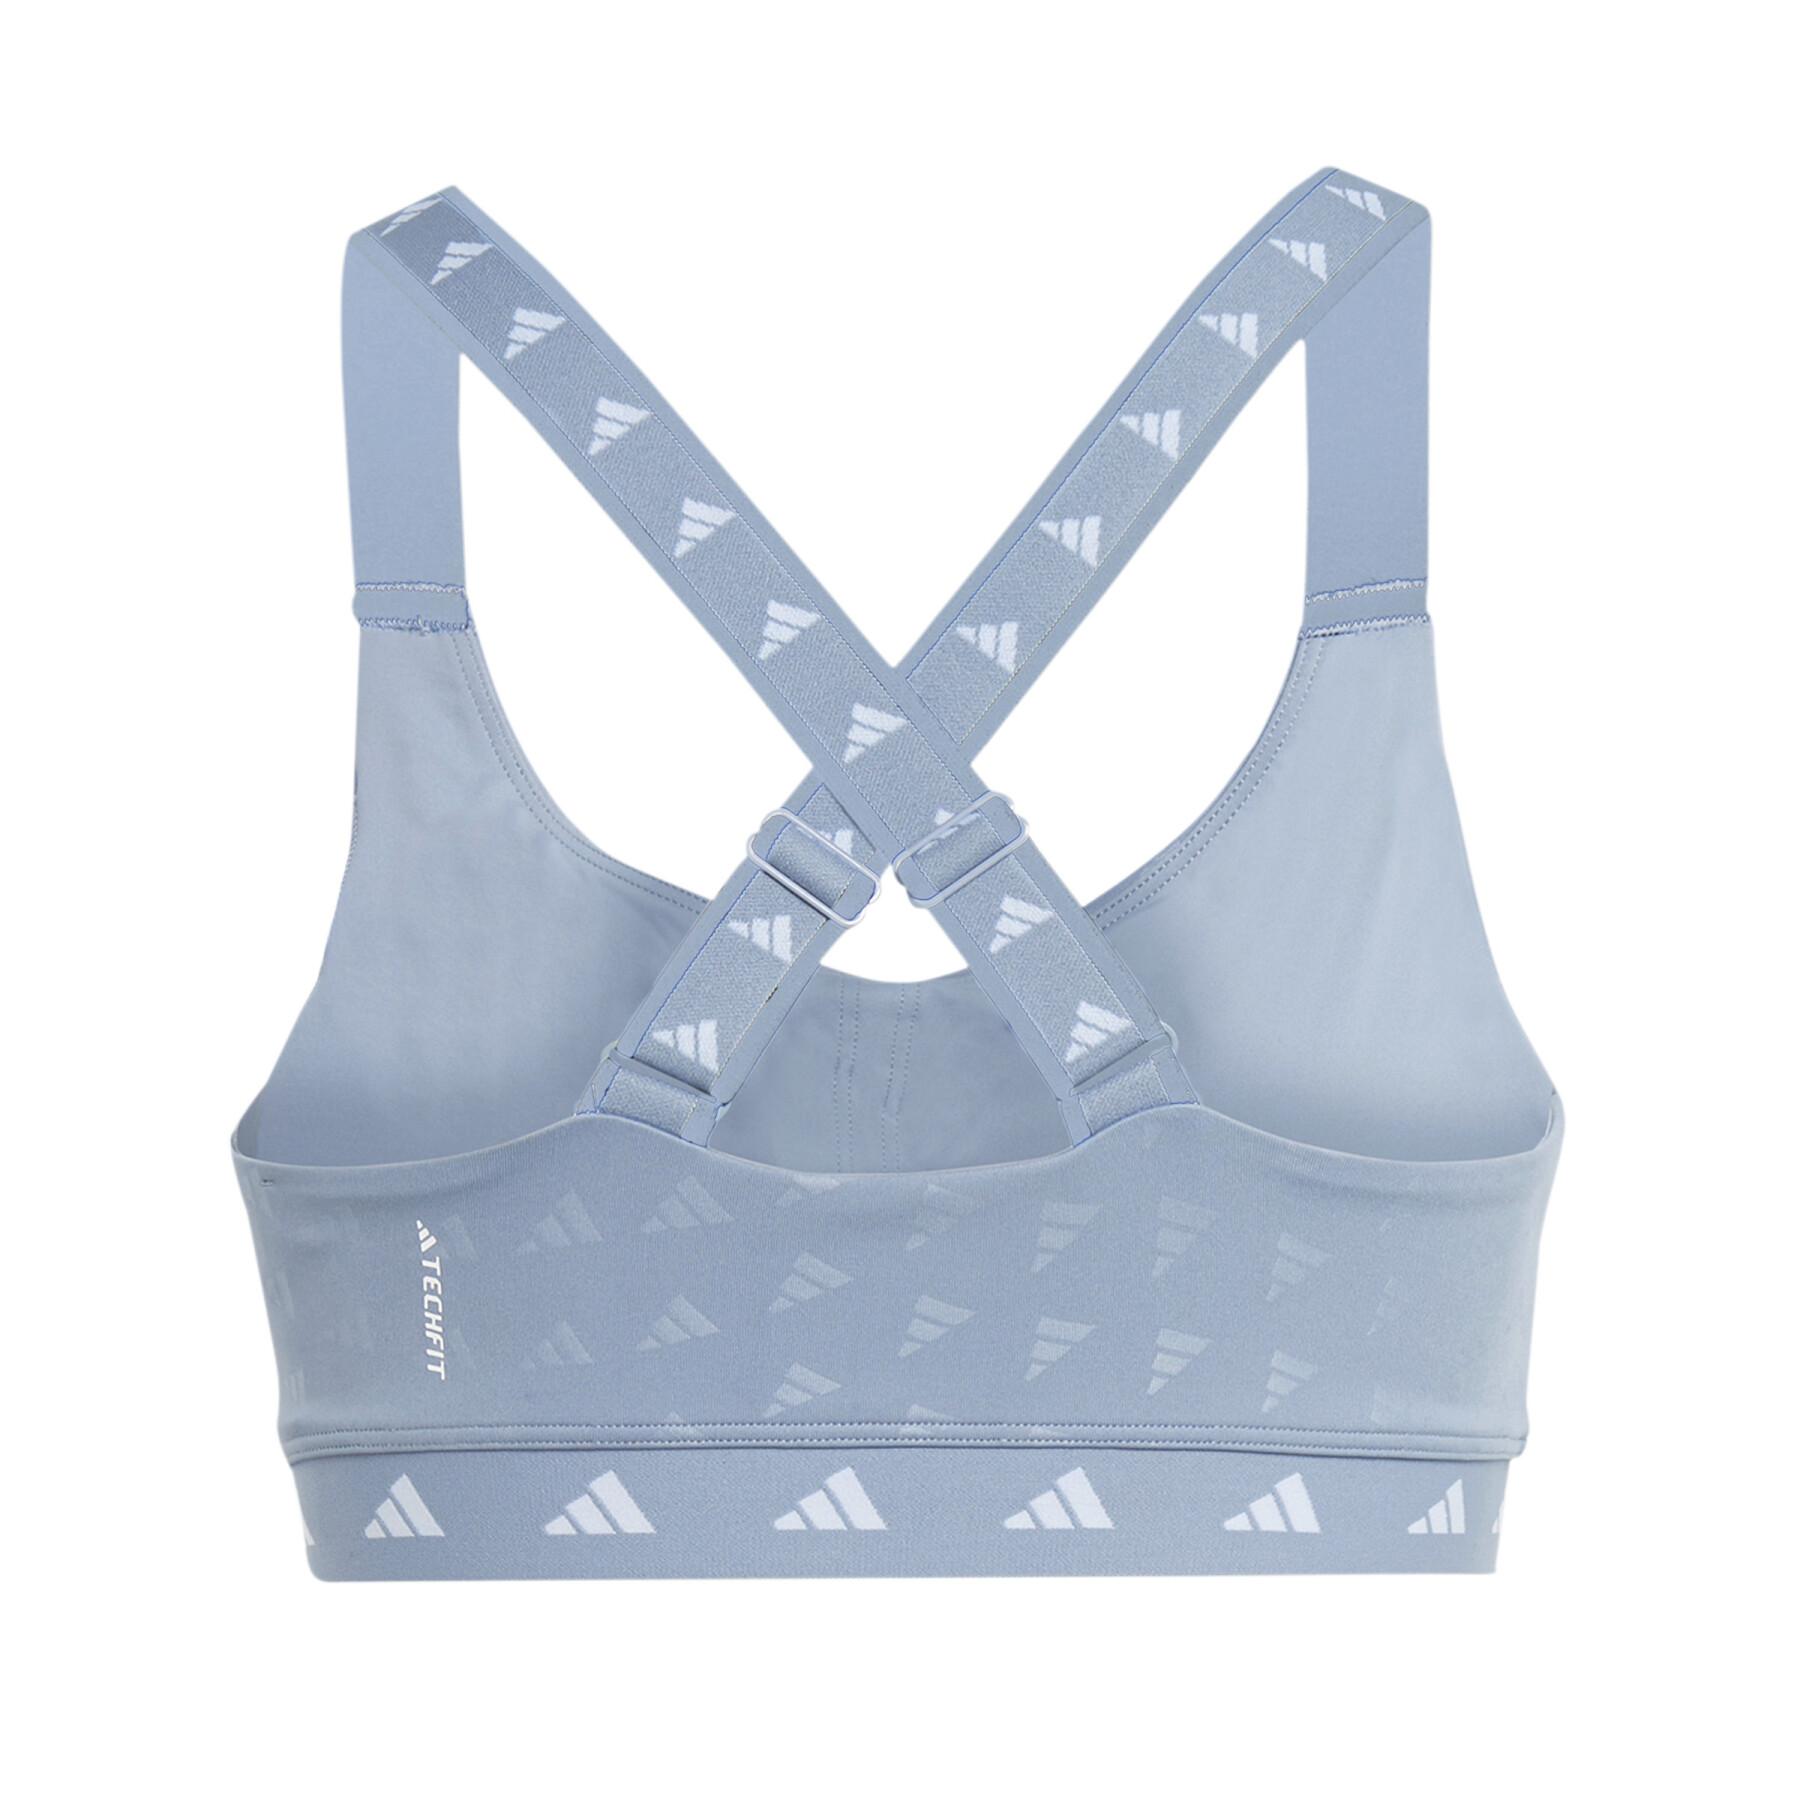 Medium support bra for women adidas PowerImpact Luxe